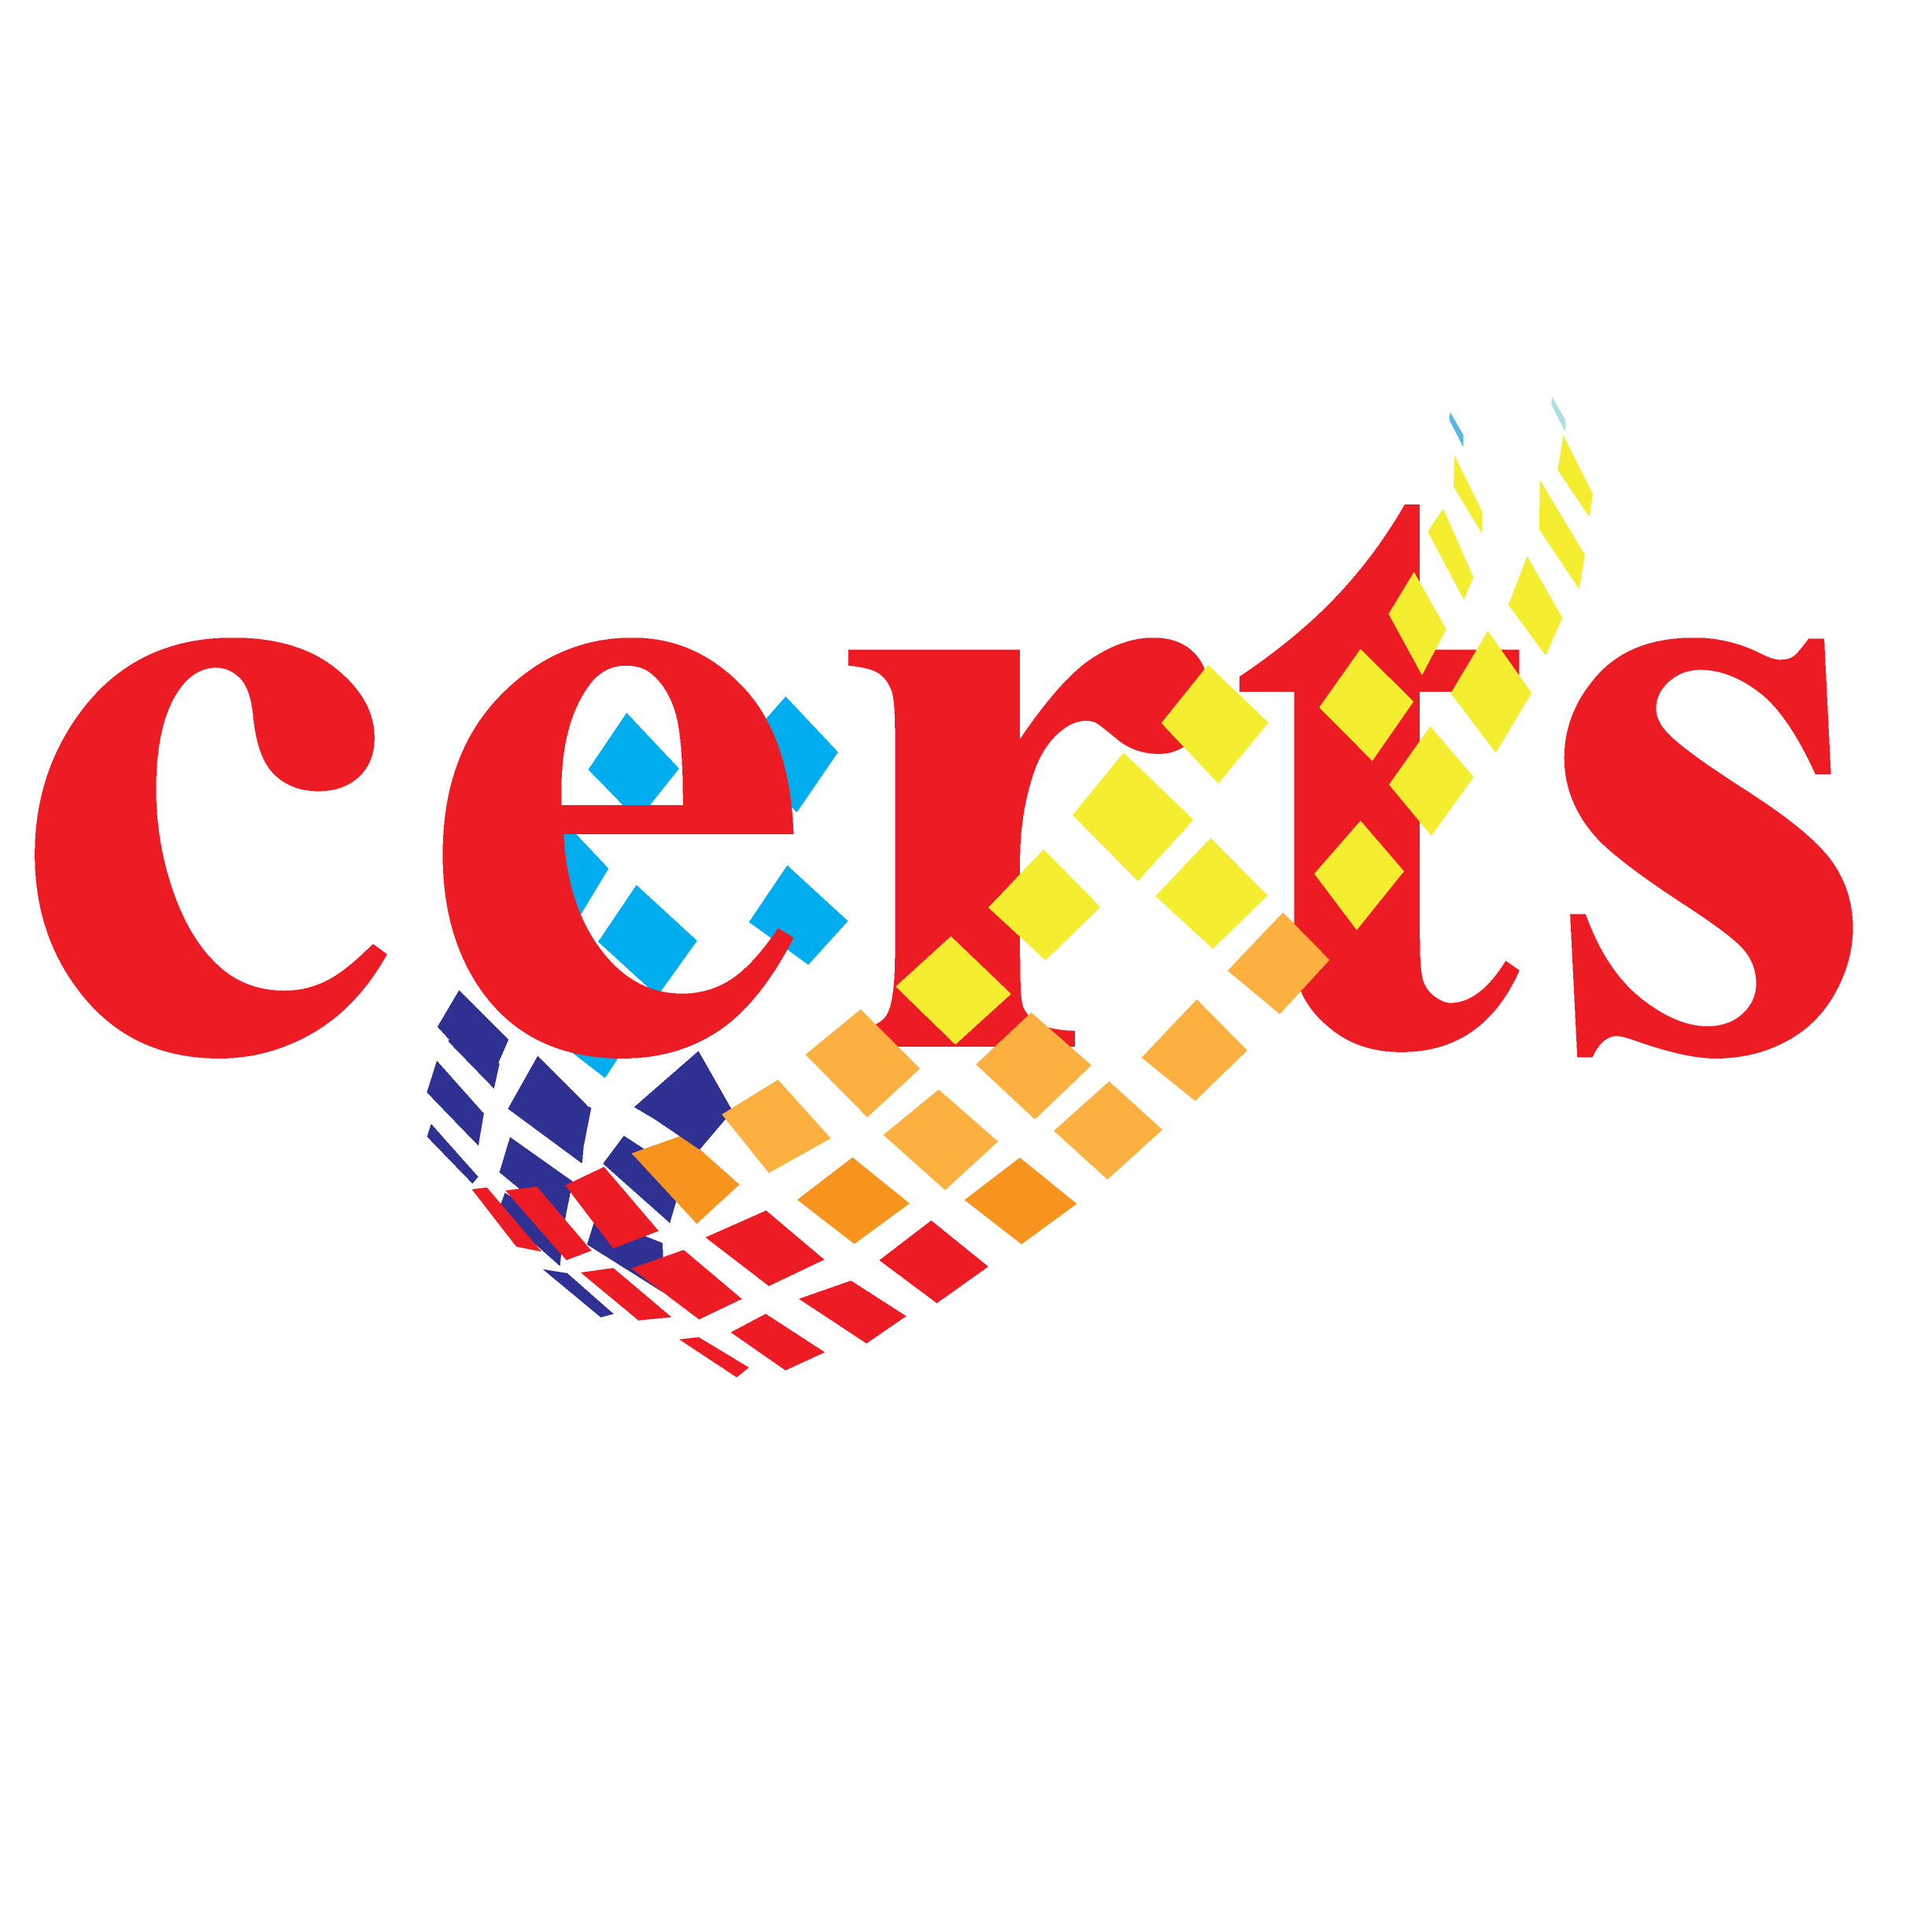 certs logo